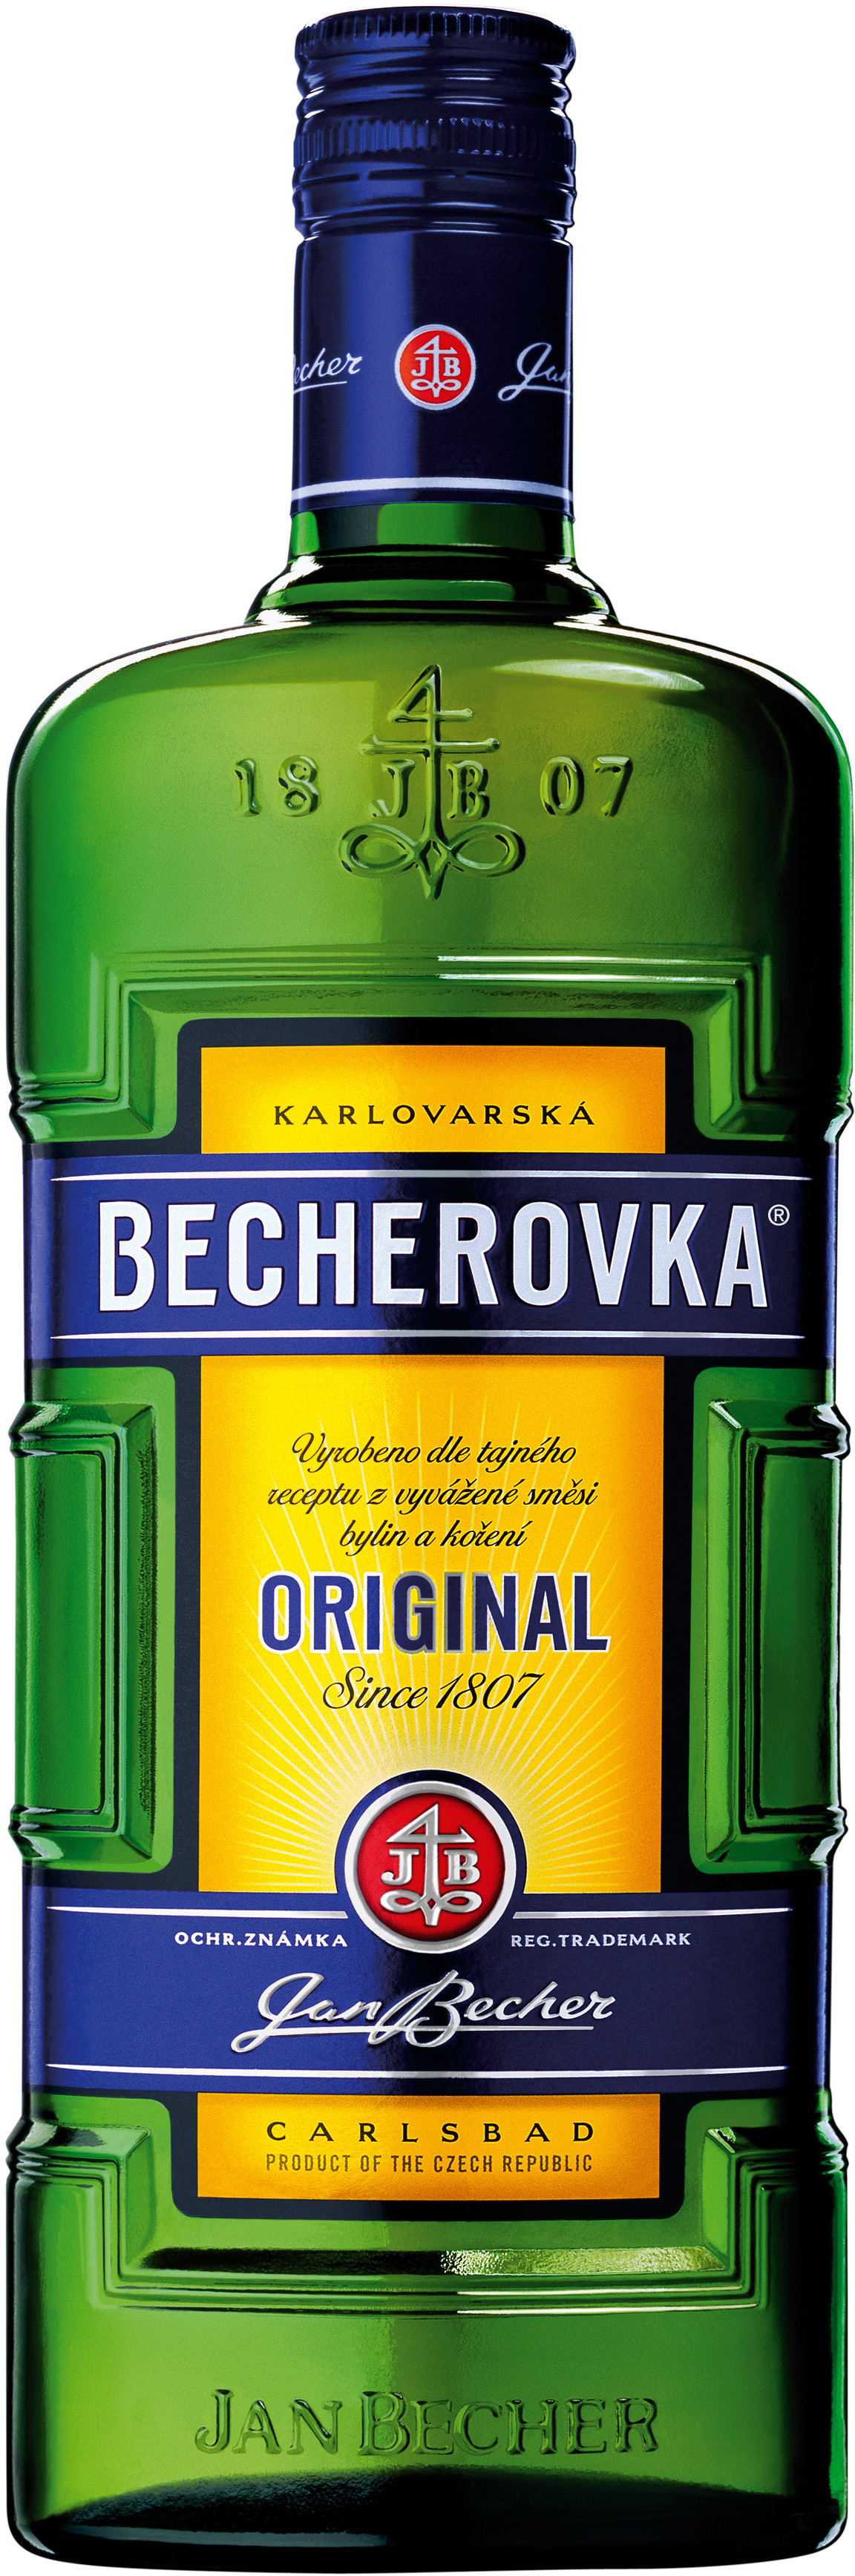 Becherovka Carlsbad Tysa Chop 38% at 0.5L in bordershop duty-free